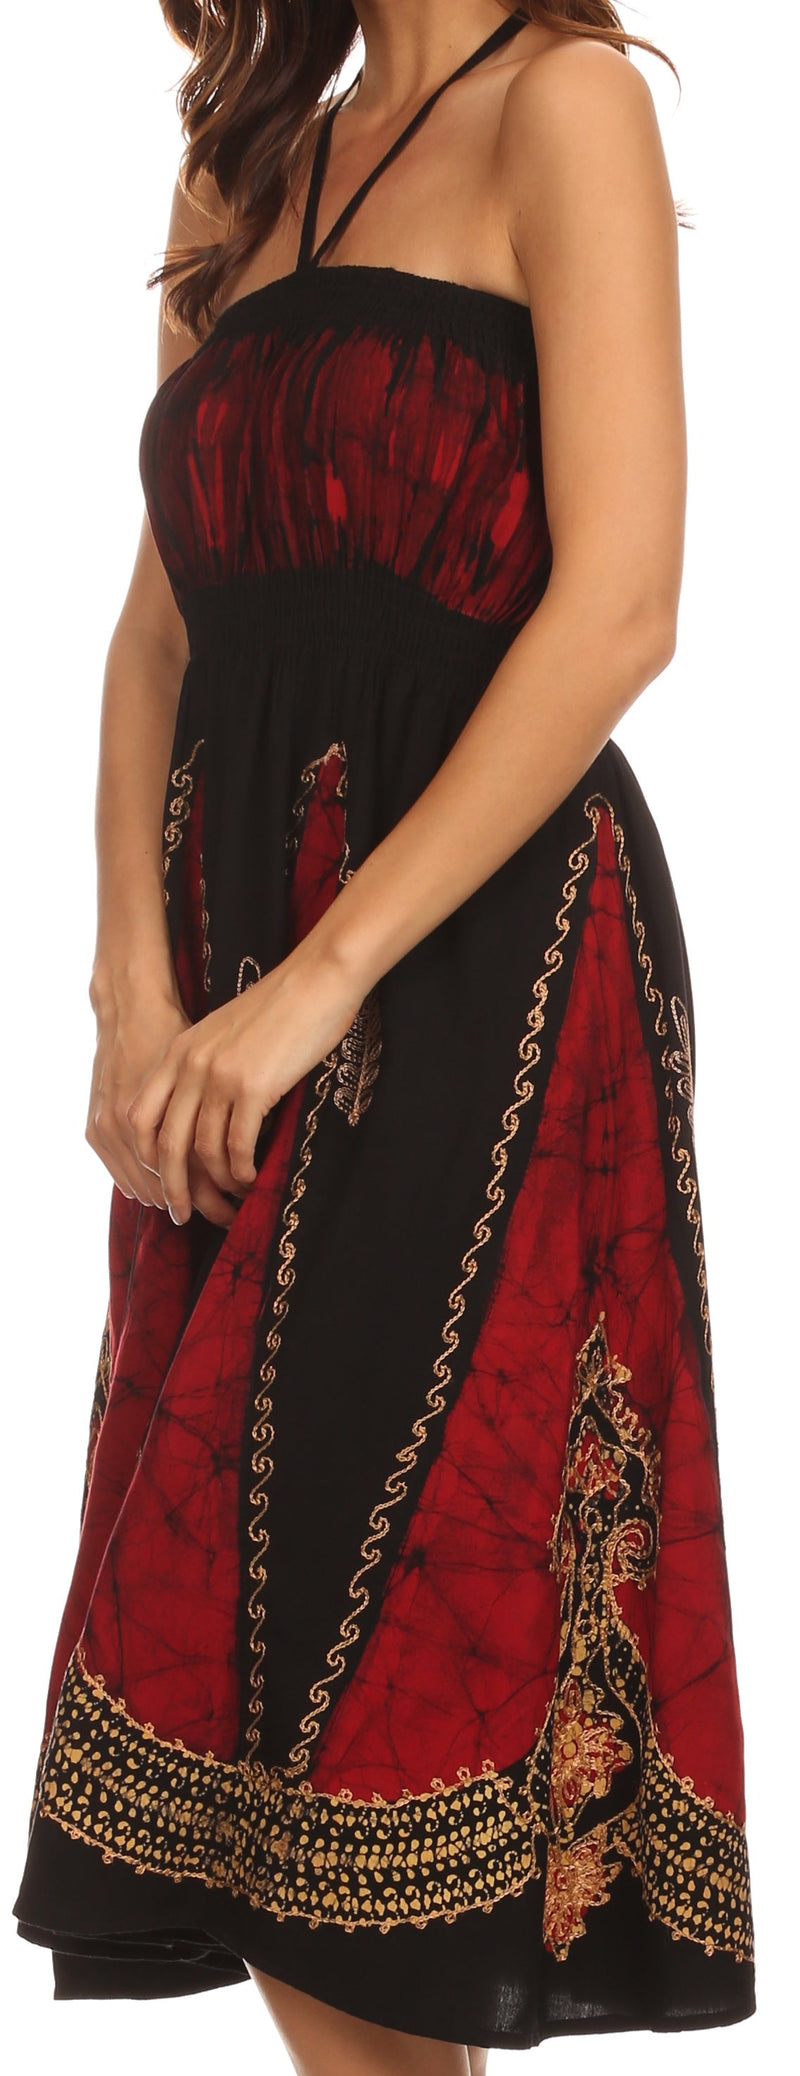 Sakkas Jaya Sleeveless Adjustable Tea Length Tube Top Embroidered Tie Dye Dress